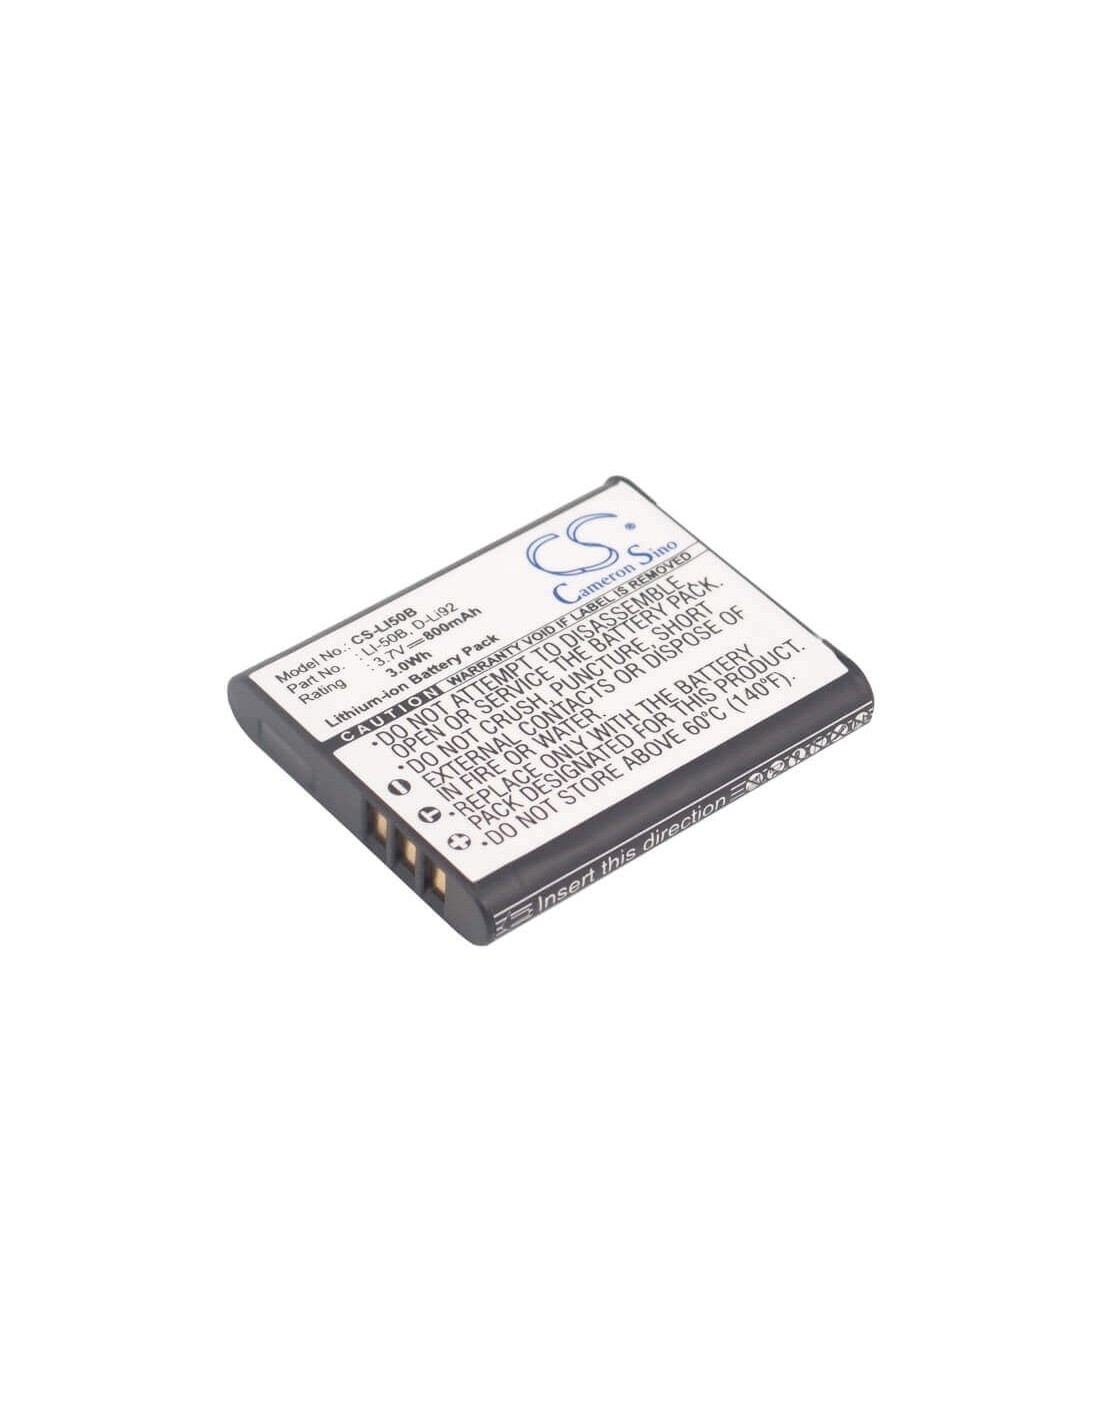 Battery for KodakPixpro Fz151, Pixpro Fz201, Pixpro 3.7V, 800mAh - 2.96Wh